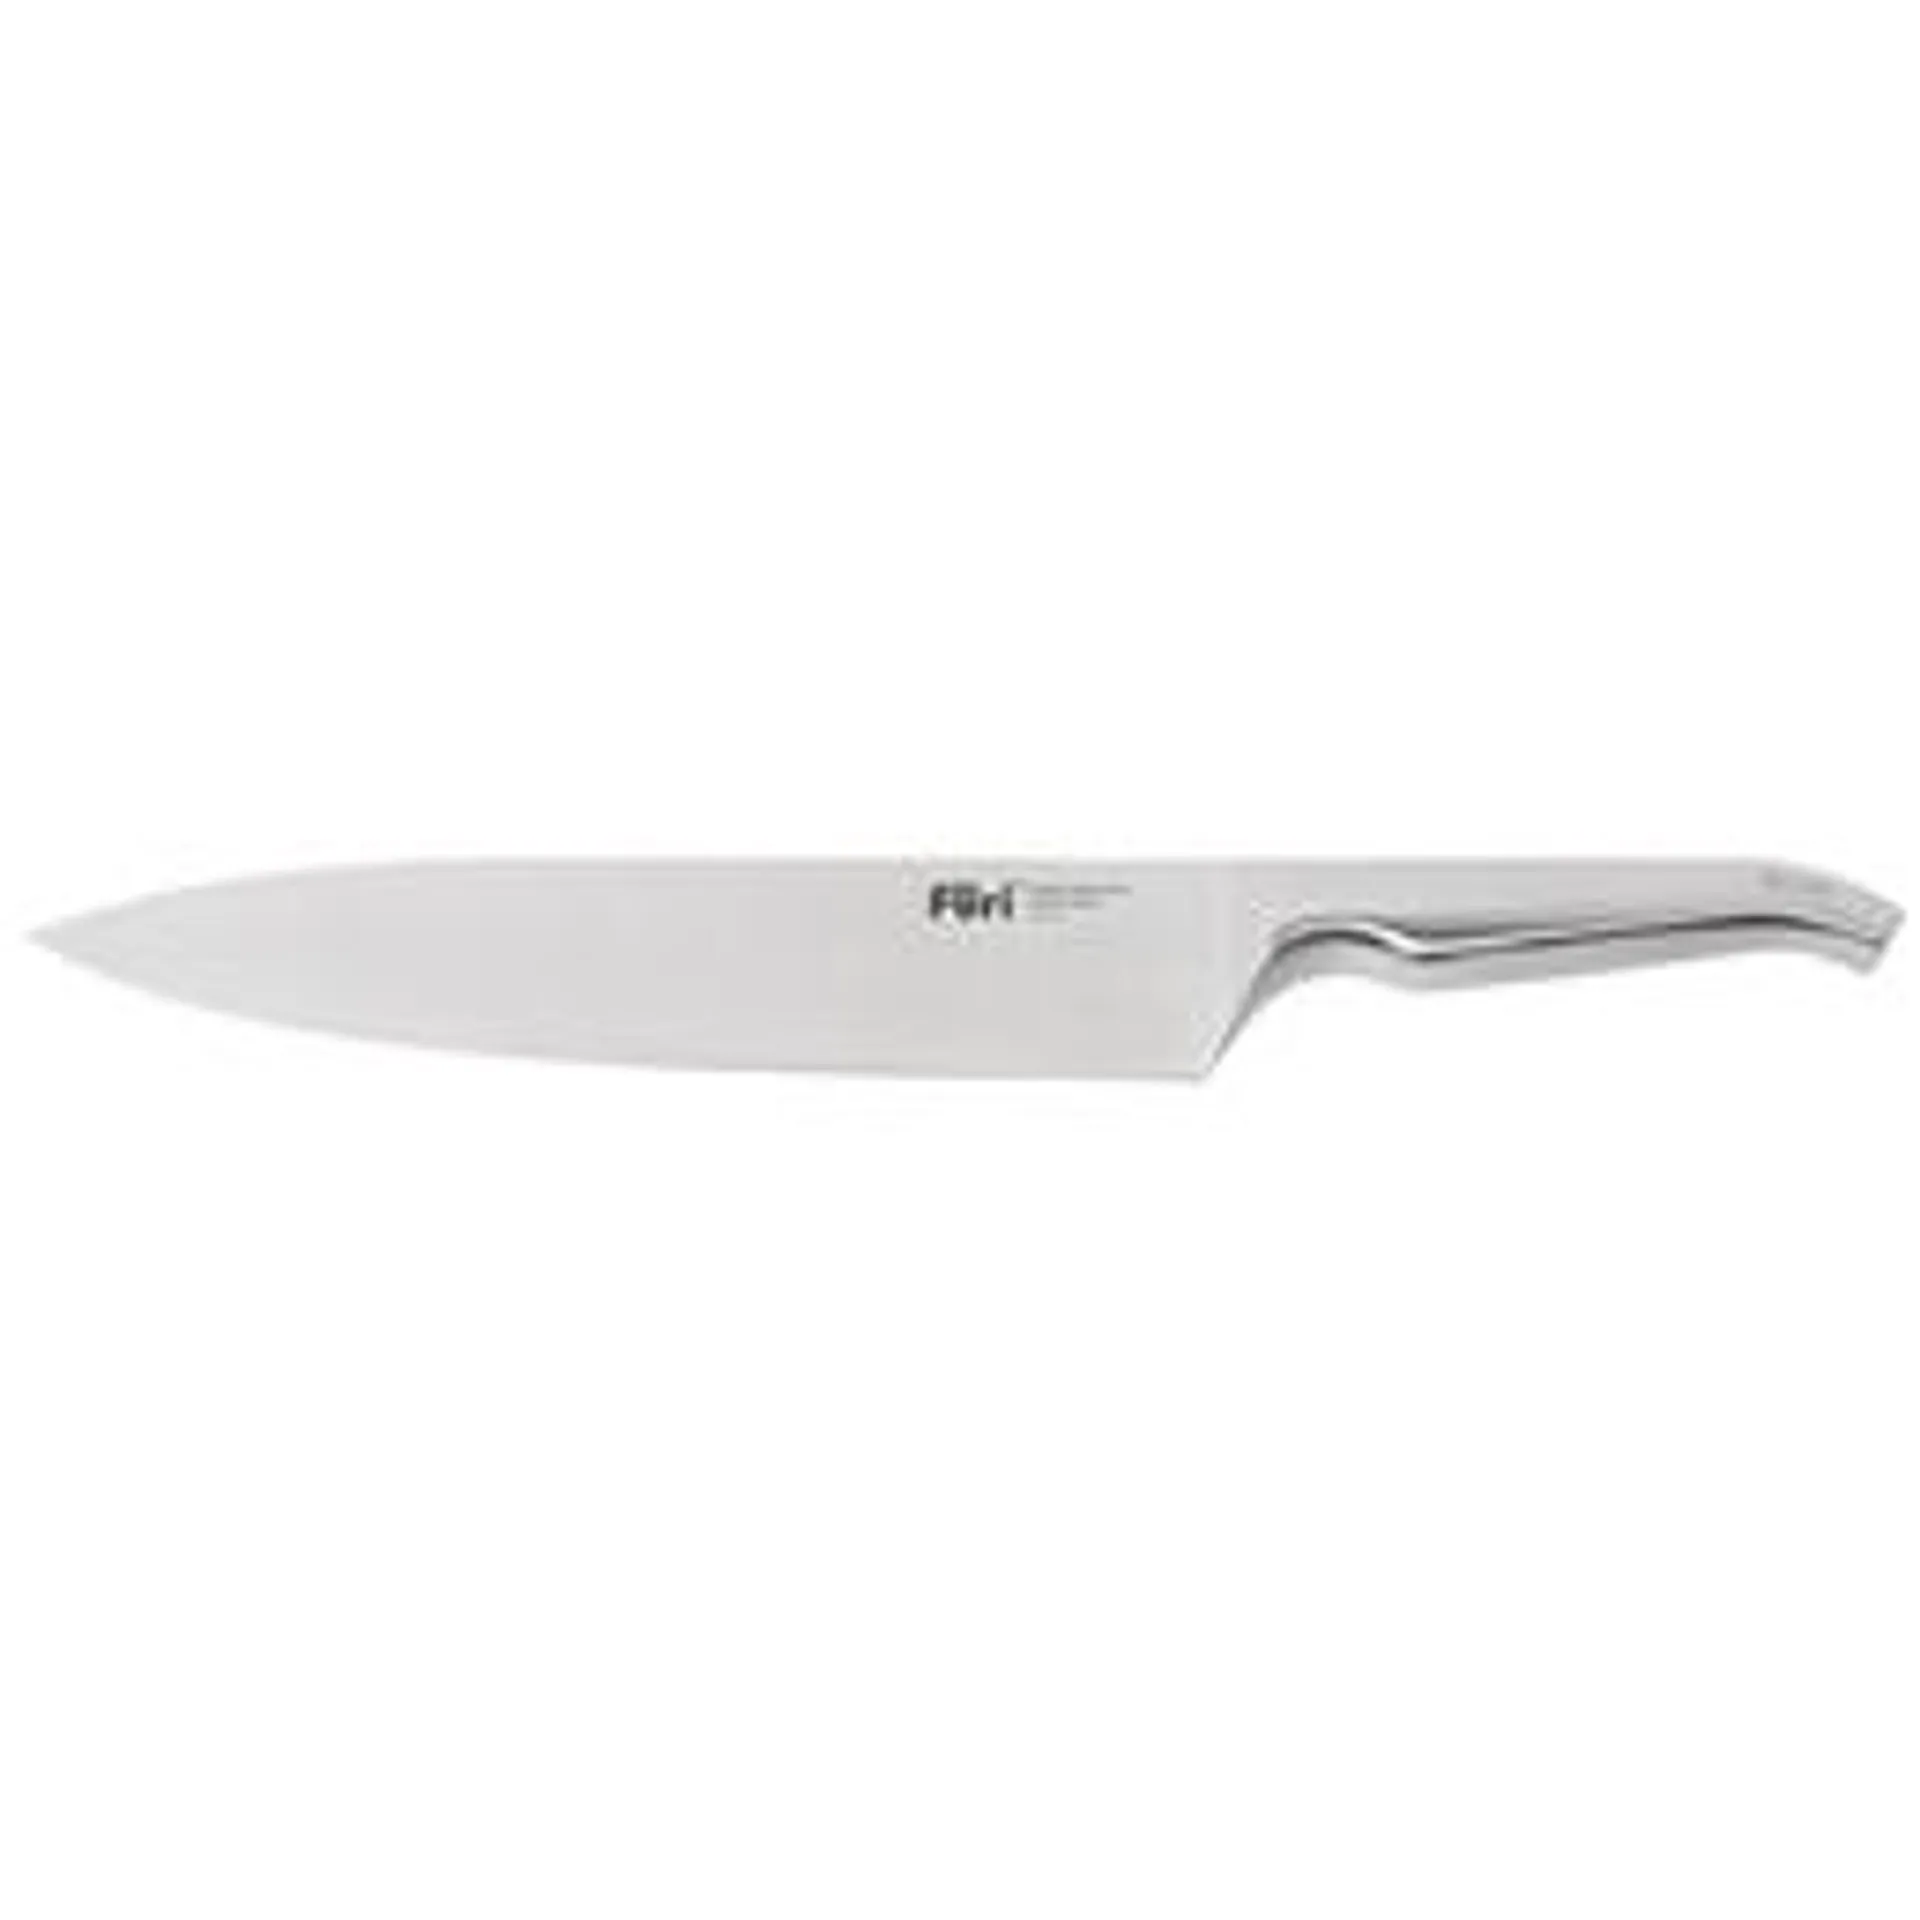 Furi Pro Chef's Knife, 23cm